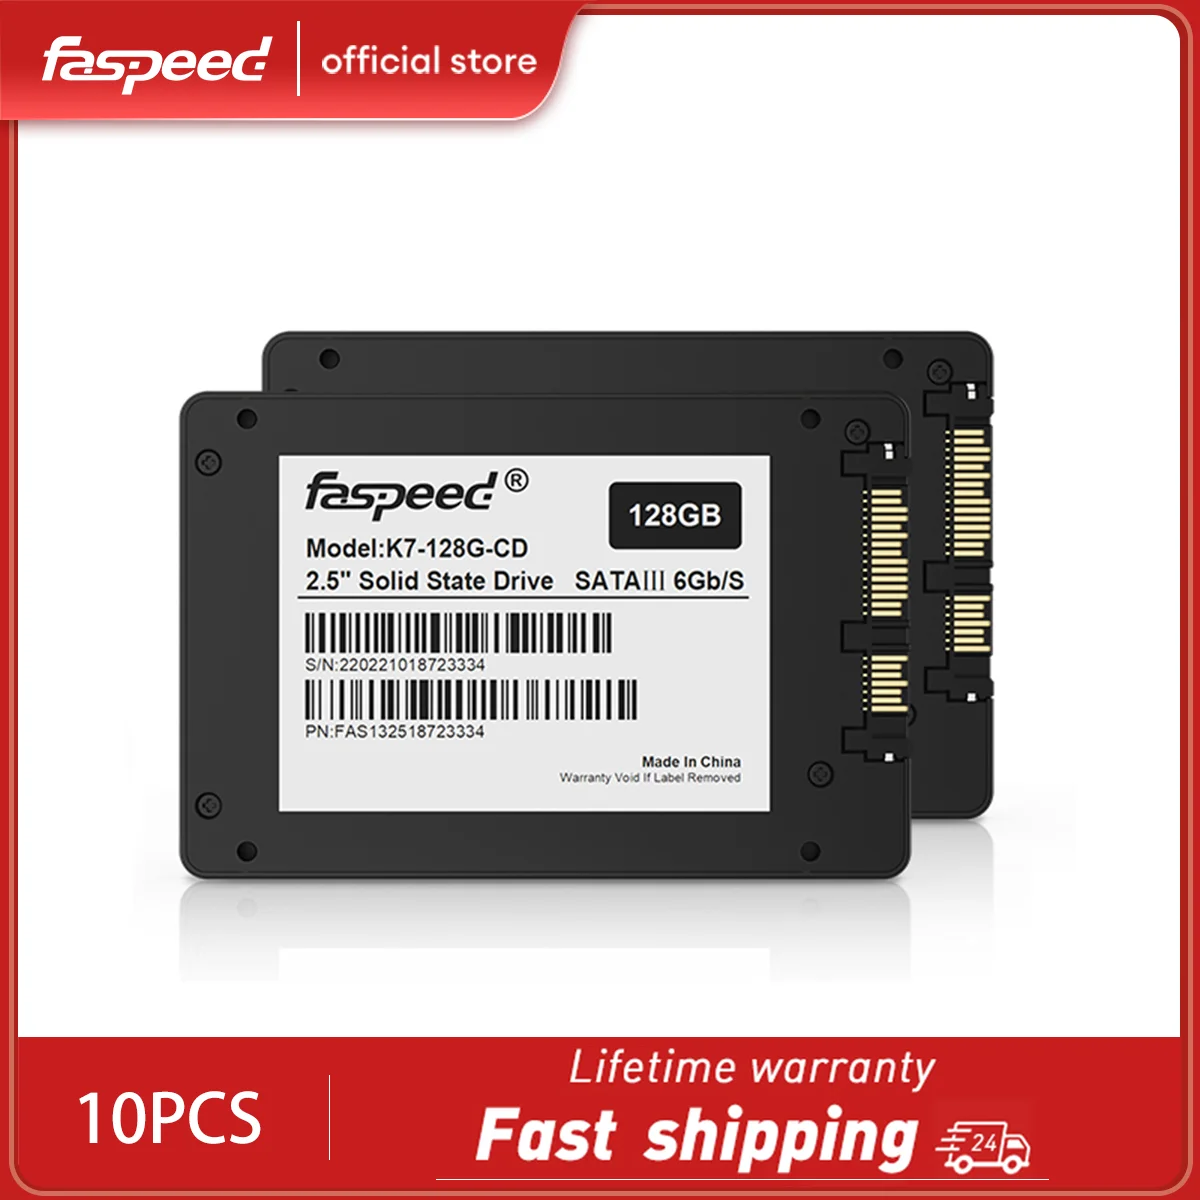 Faspeed 2.5インチ内蔵SSD 960GB